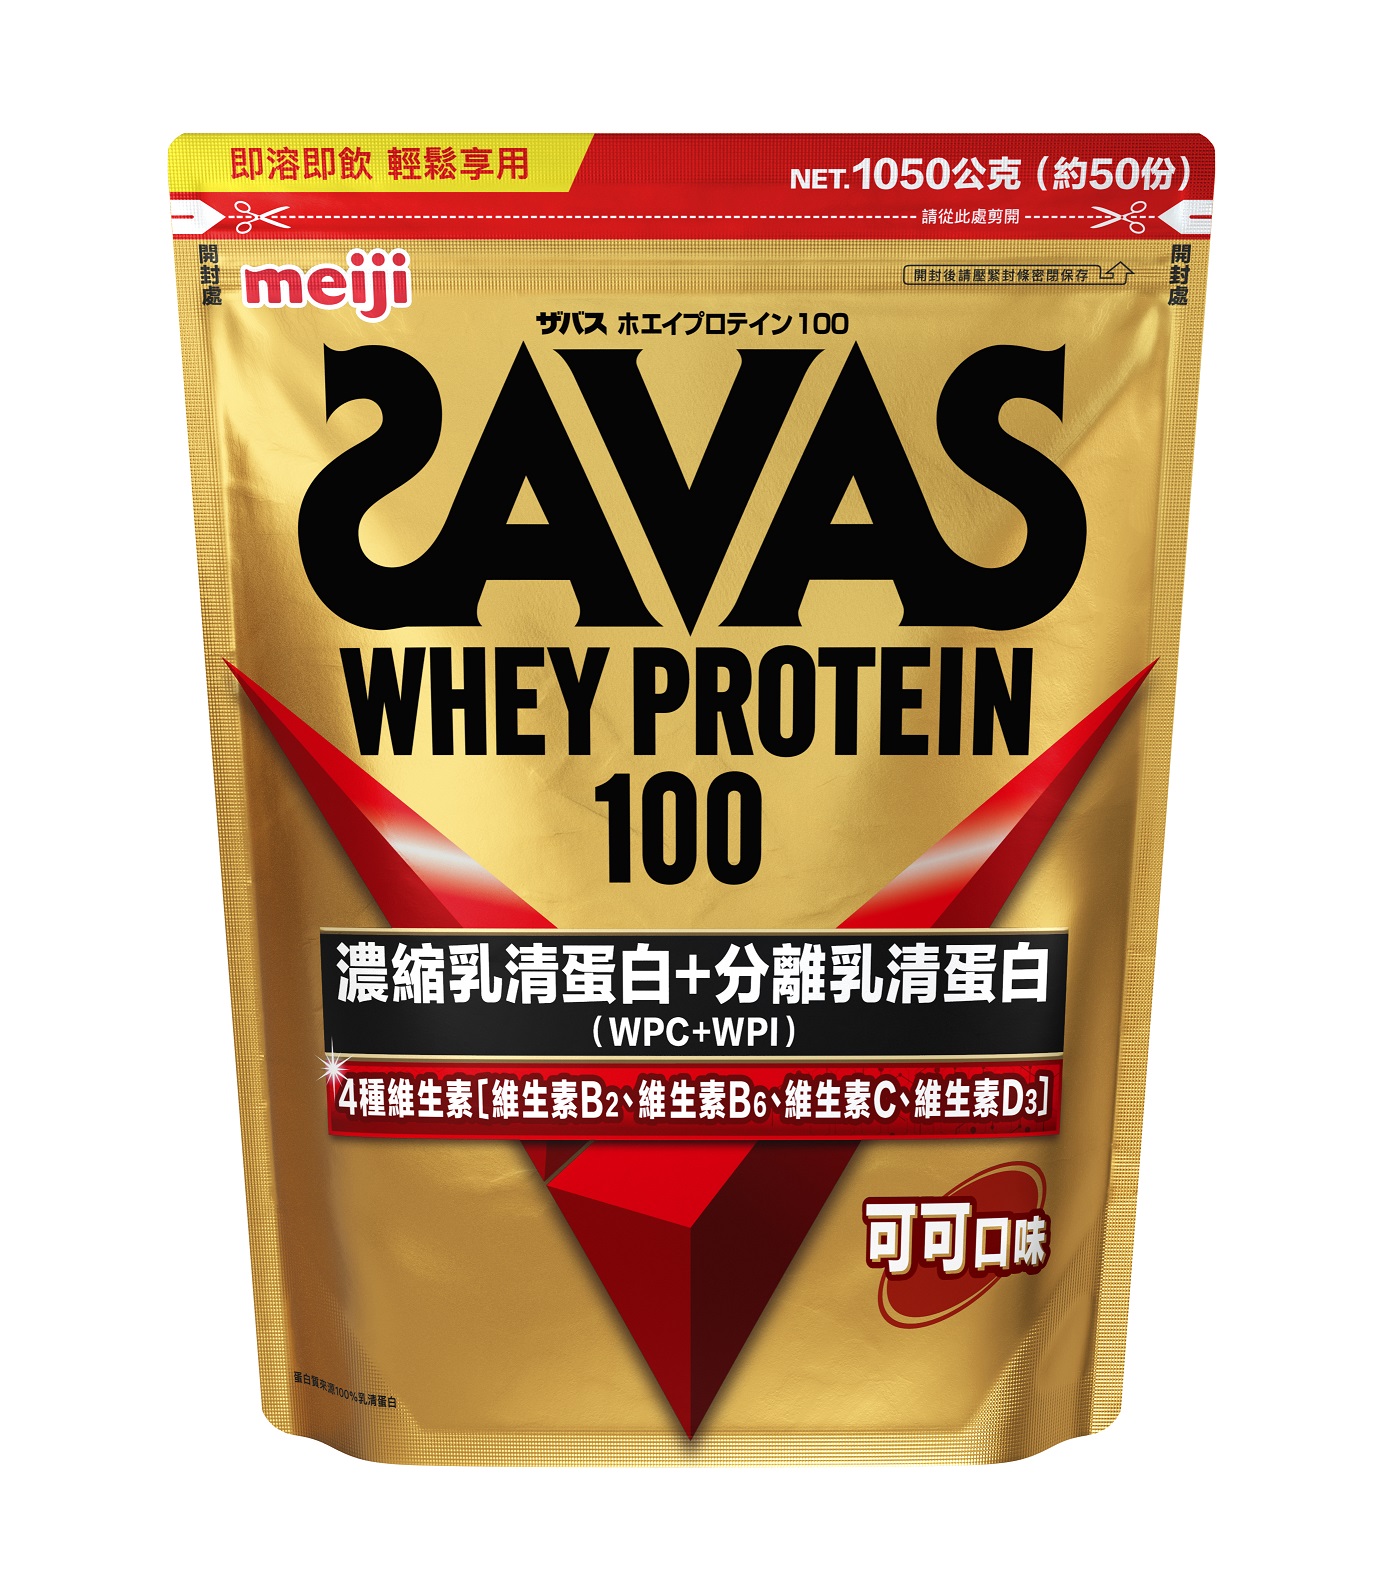 A photo showing SAVAS product.